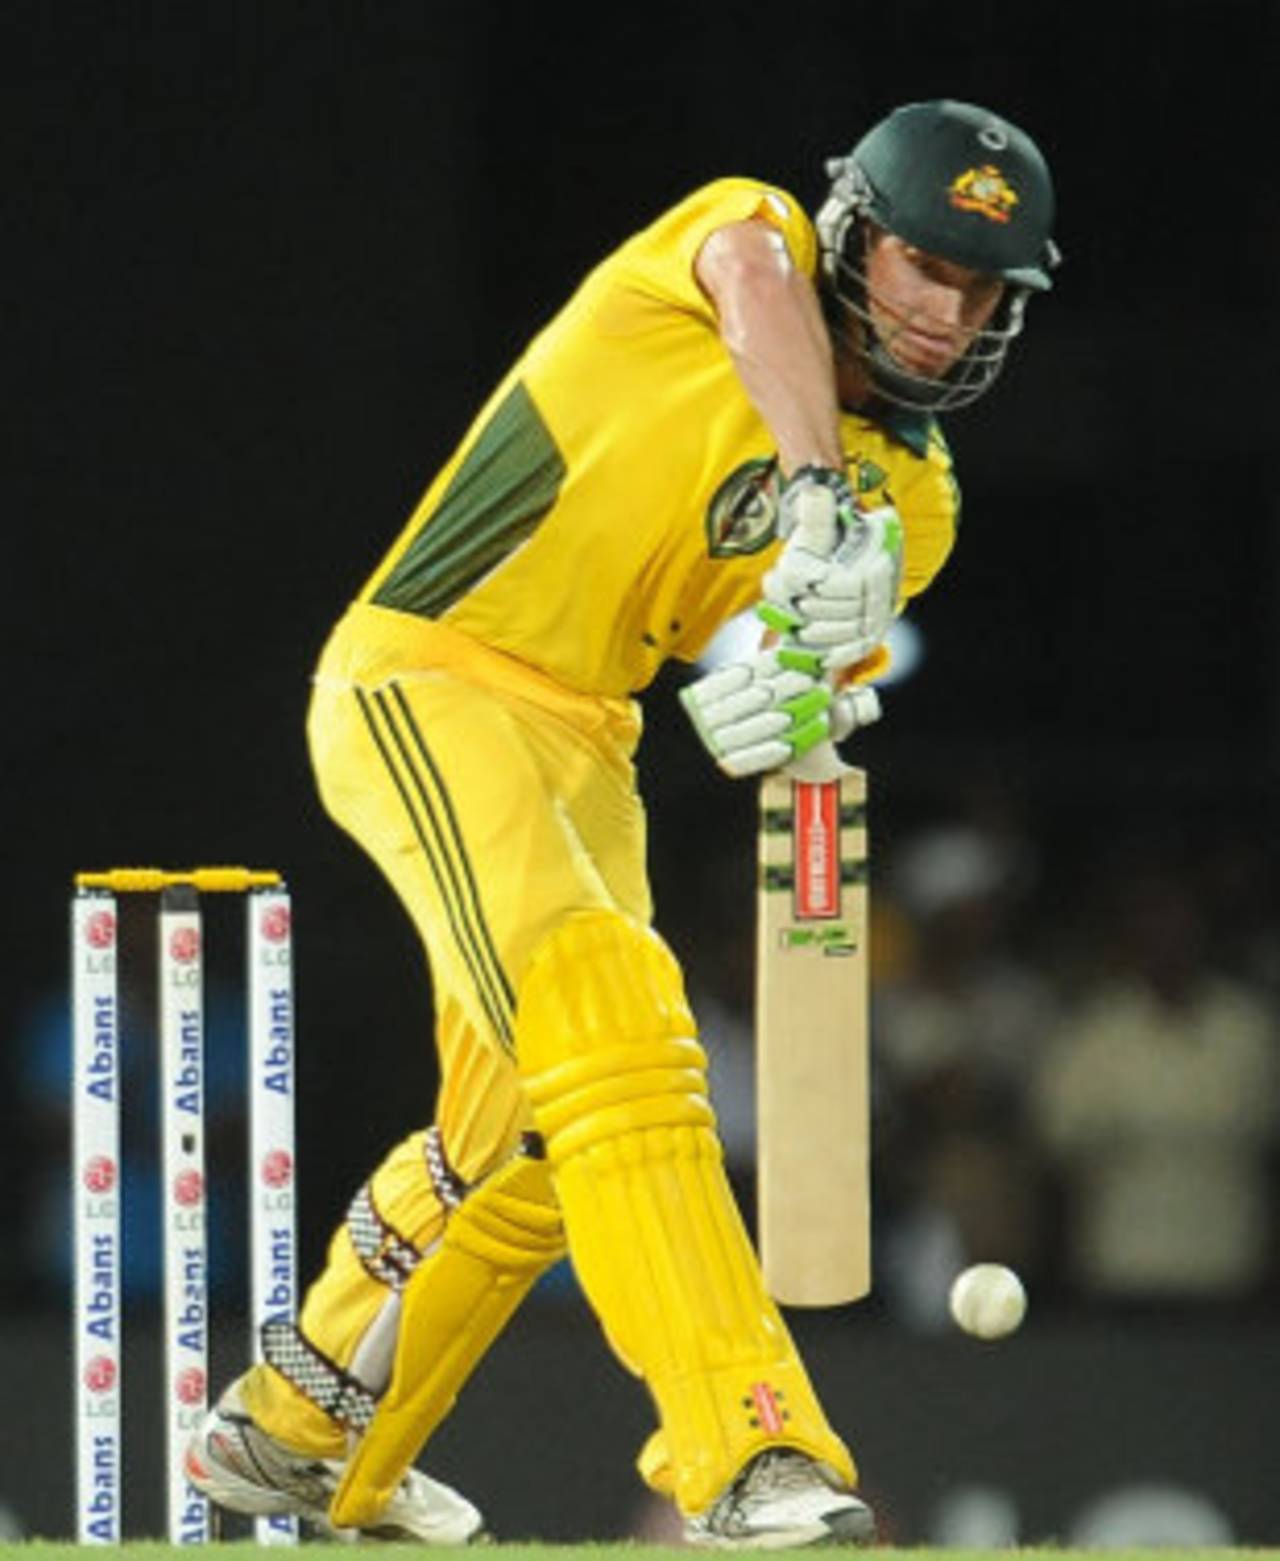 Shaun Marsh's 70 in the fourth ODI helped seal the series for Australia&nbsp;&nbsp;&bull;&nbsp;&nbsp;AFP